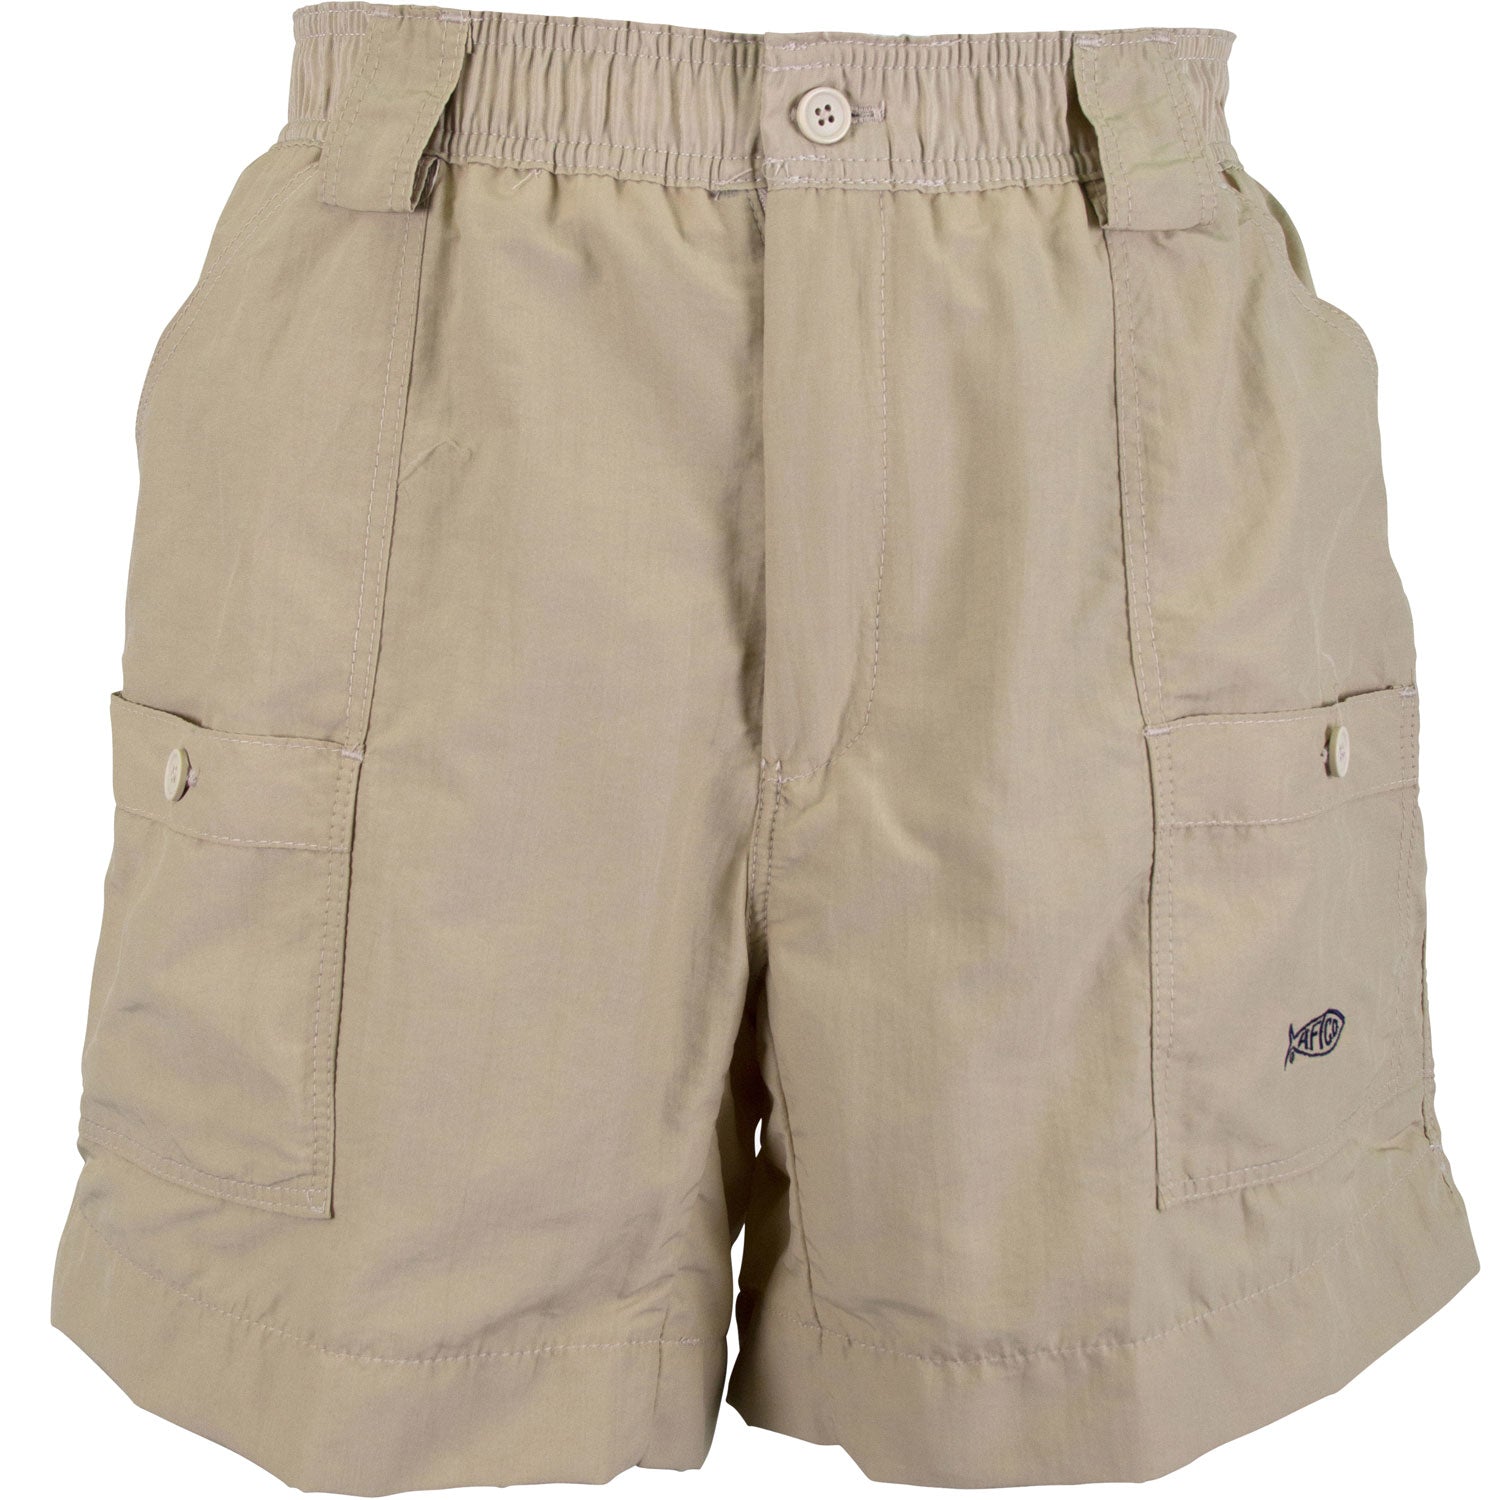 AFTCO Men's Original Fishing Shorts